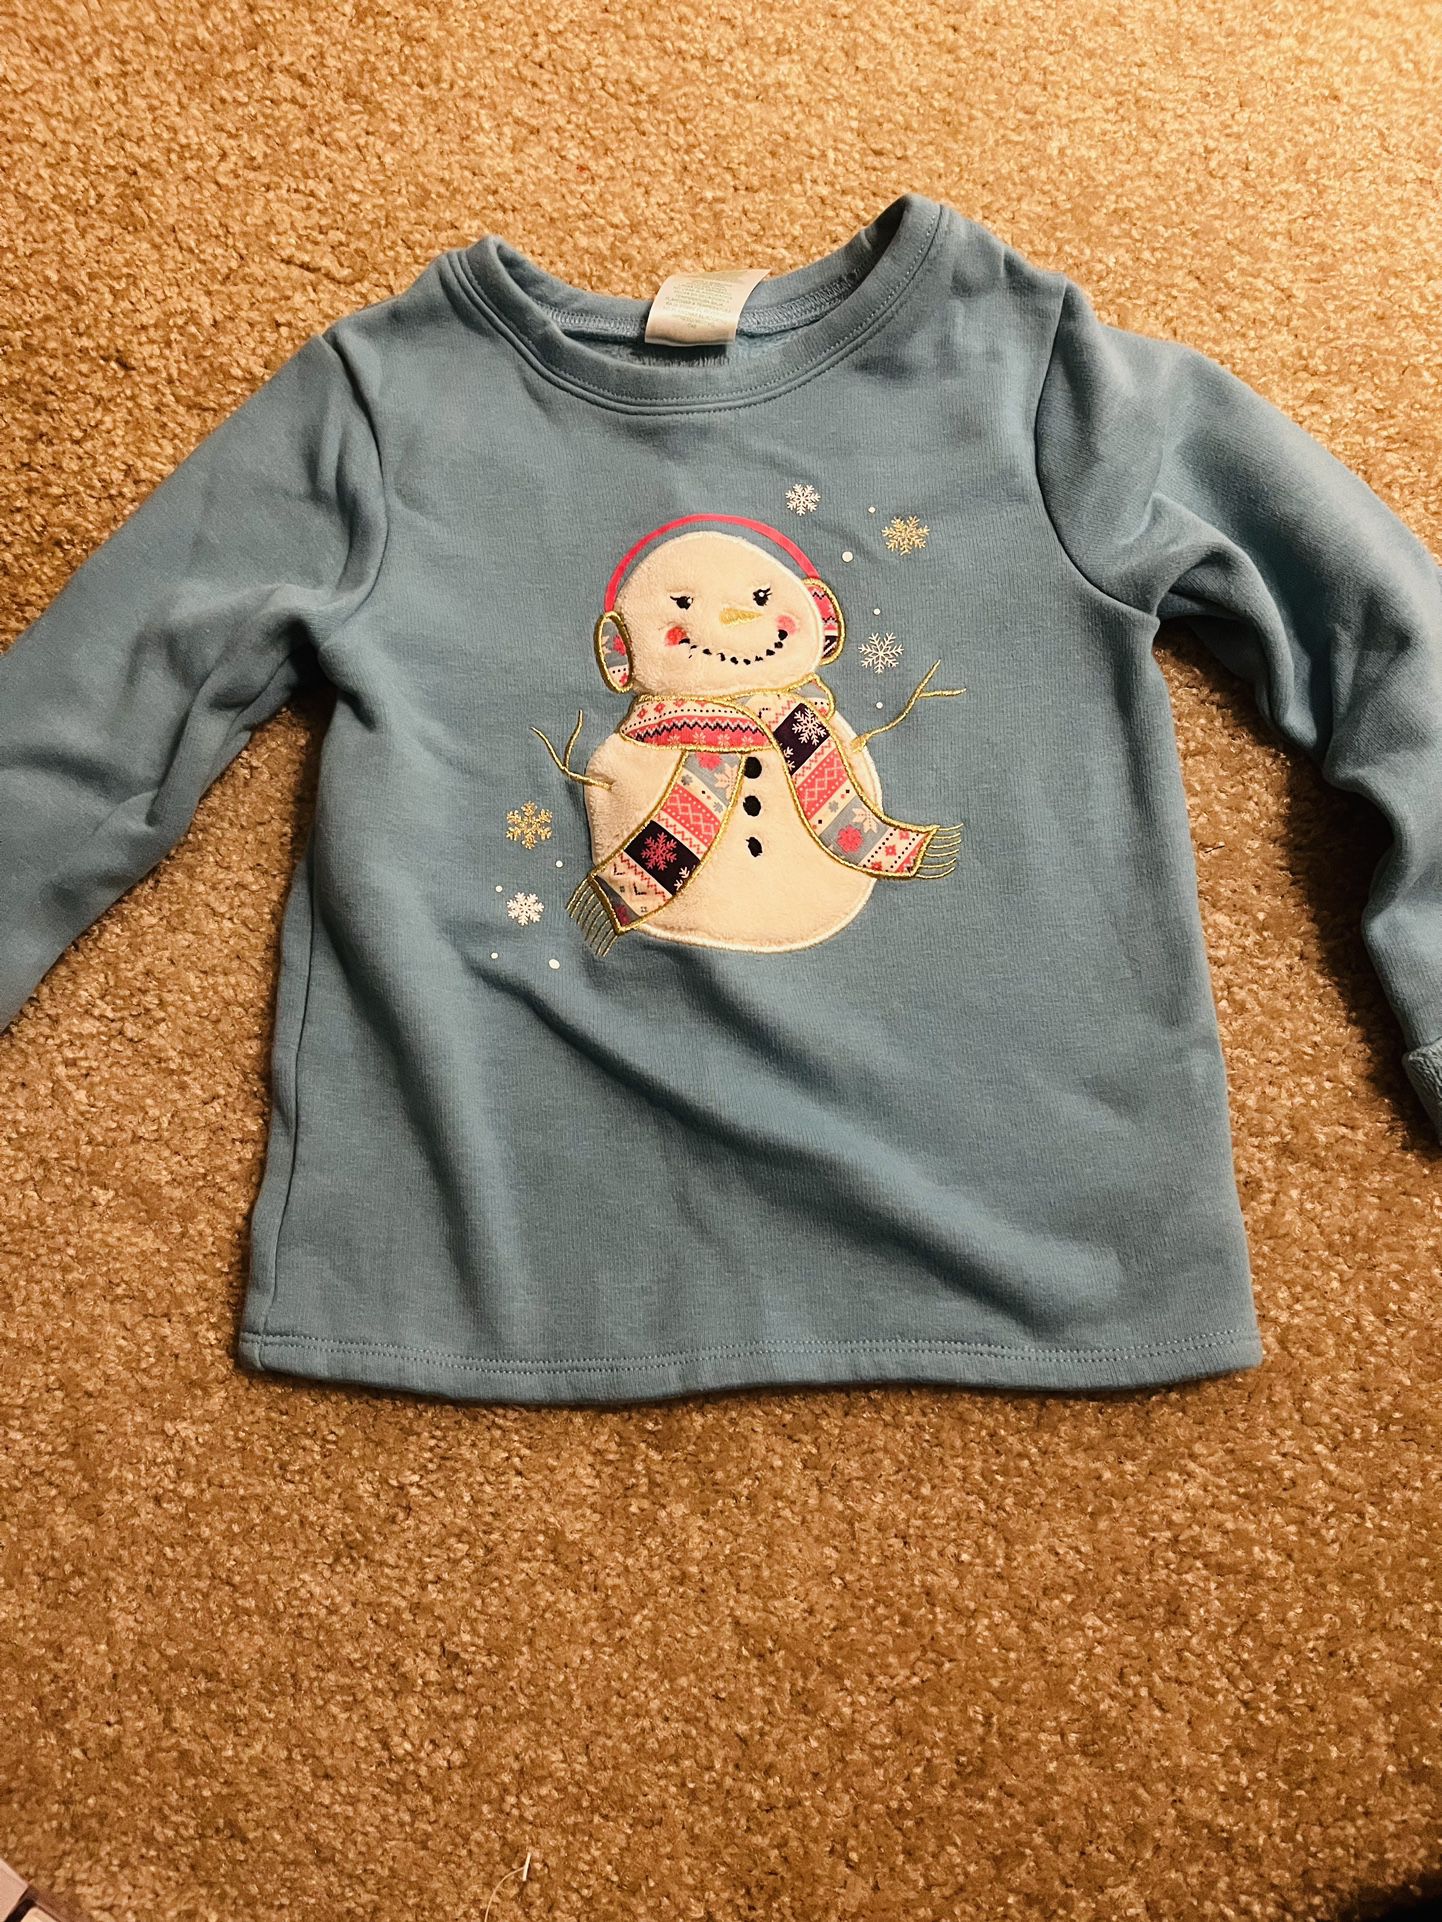 Xmas Girl Sweater Size 5 7$